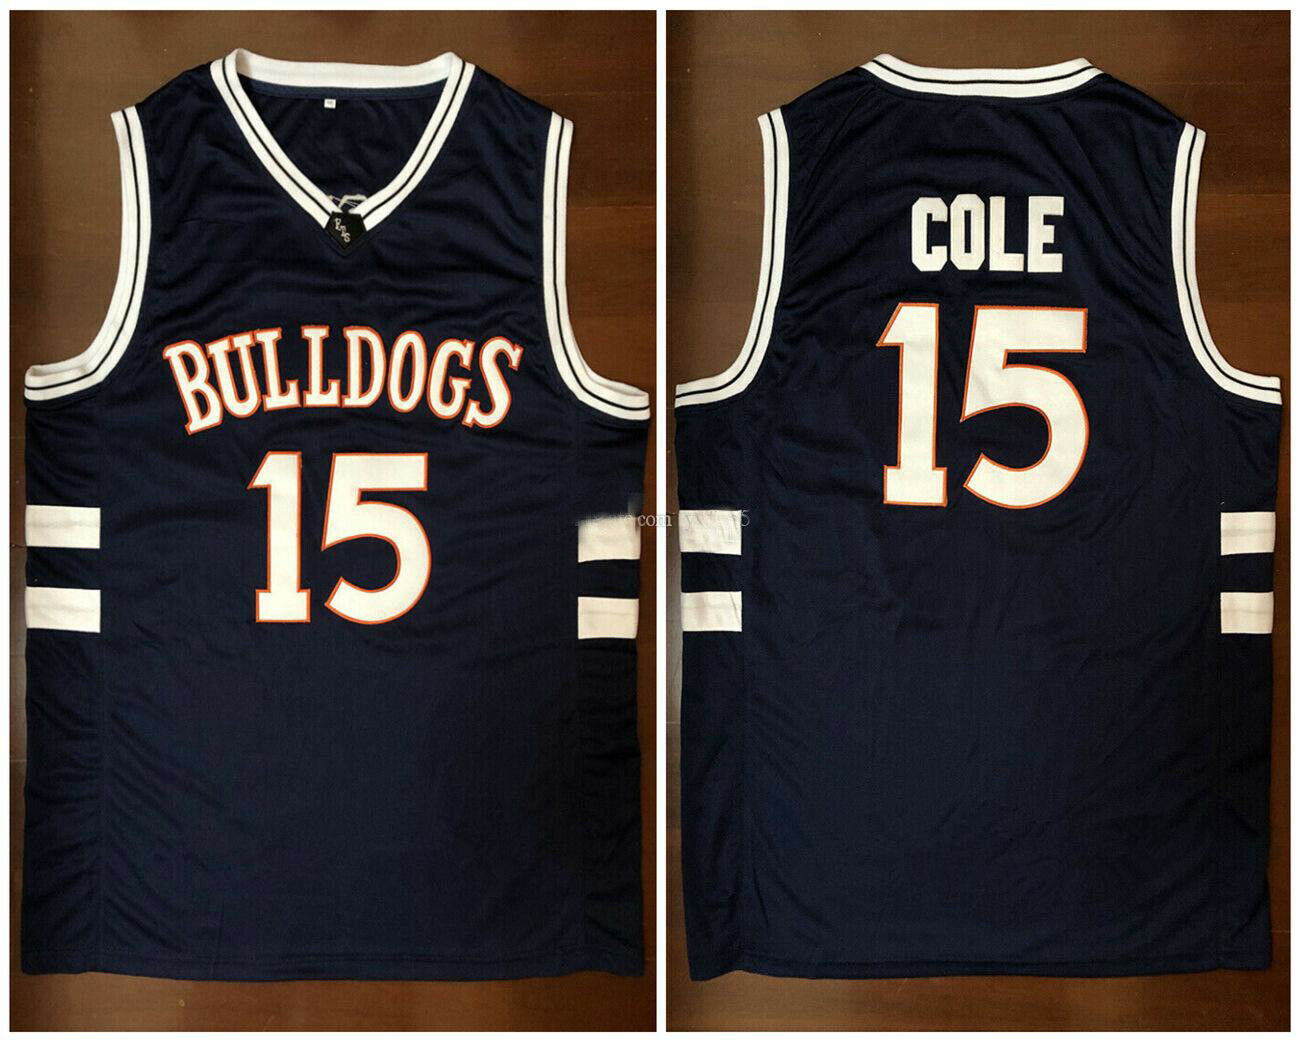 Jermaine Cole #15 Bulldogs High School Basketball Jerseys J.Cole Shirt - $32.67 - $38.61